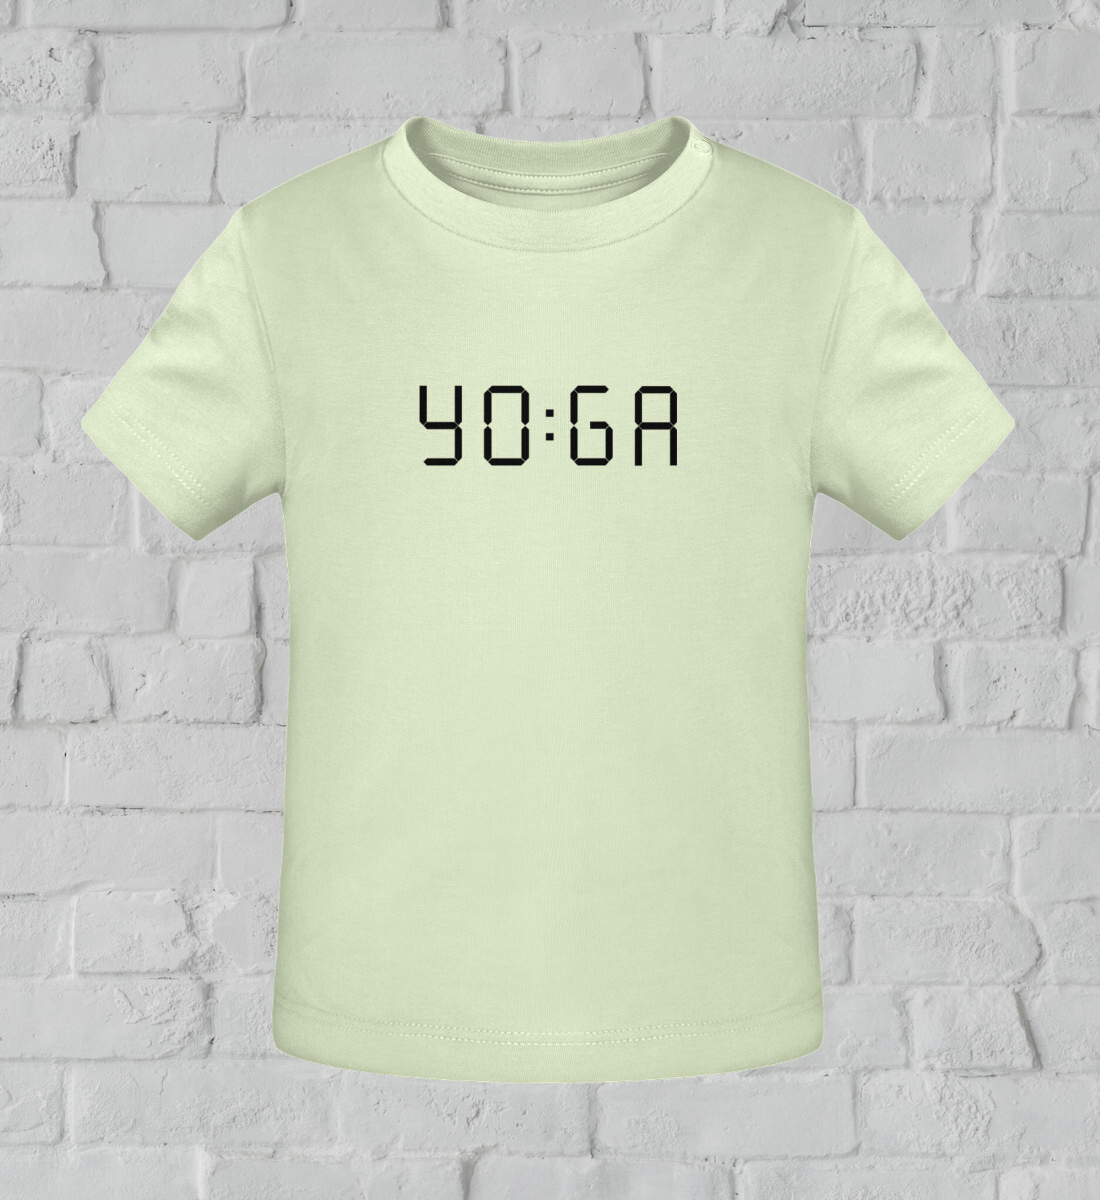 zeit für yoga l yoga shirt kinder hellgrün l yoga kleidung kinder l nachhaltige mode für kinder l vegane kinder mode